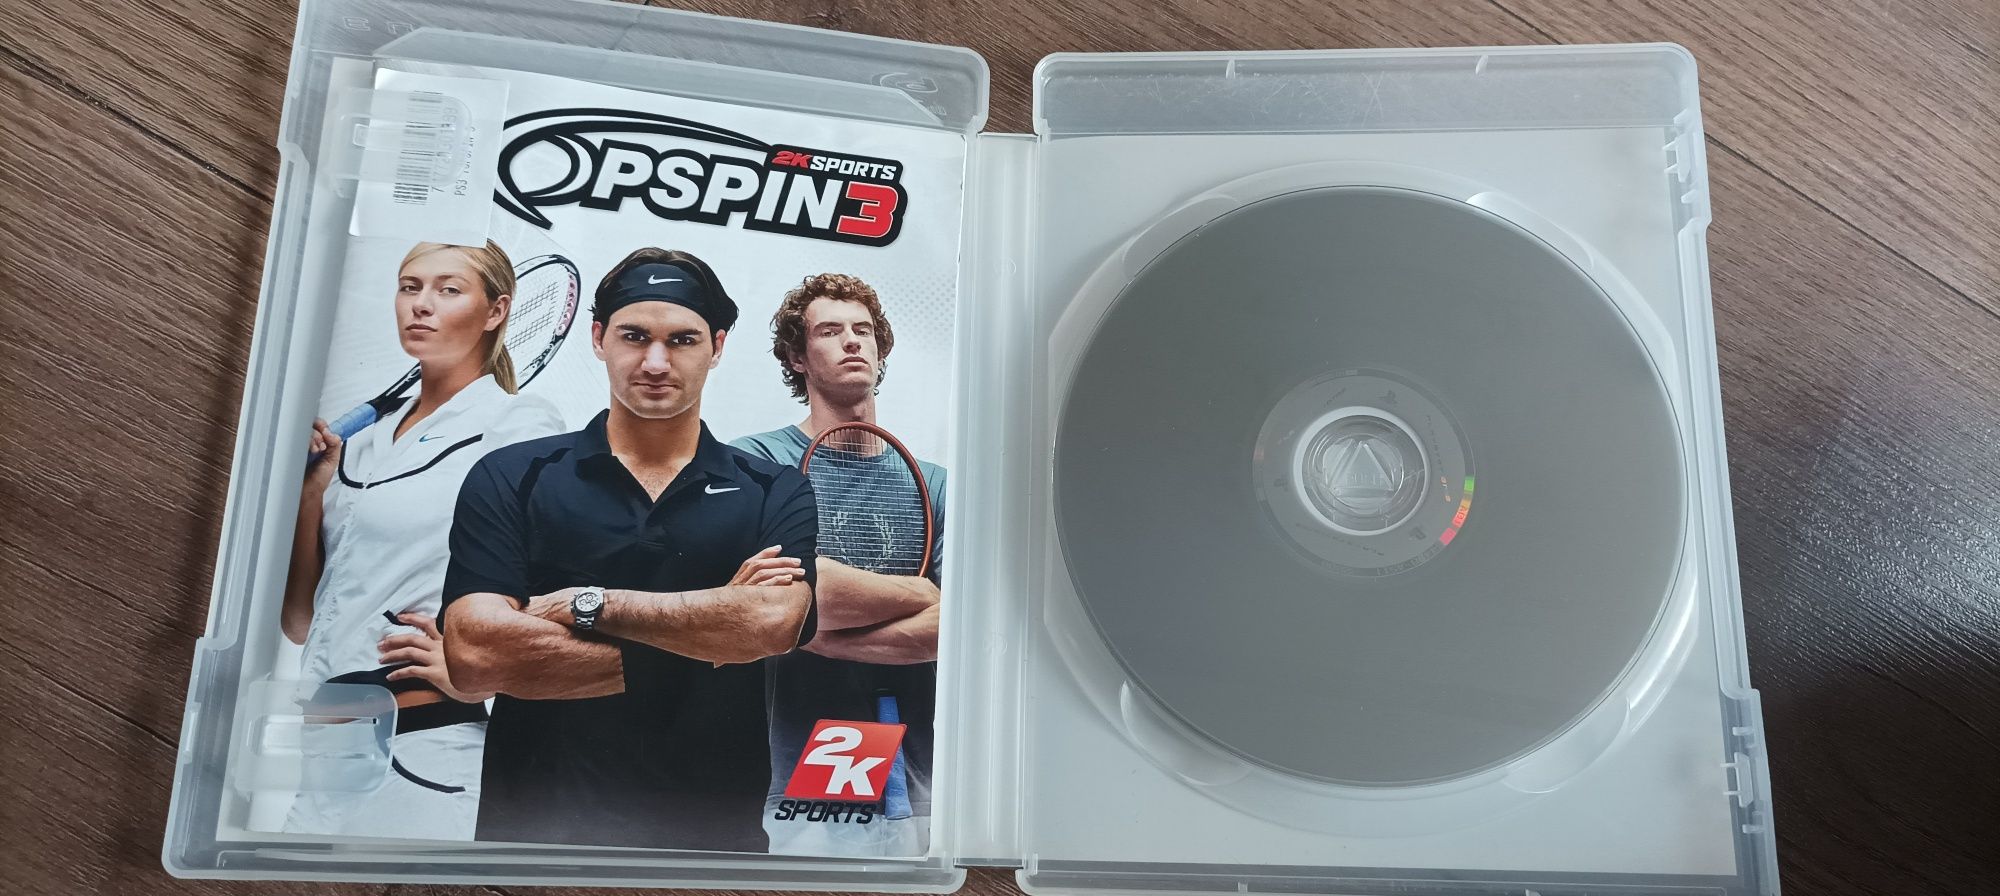 TOPSPIN3 PlayStation3